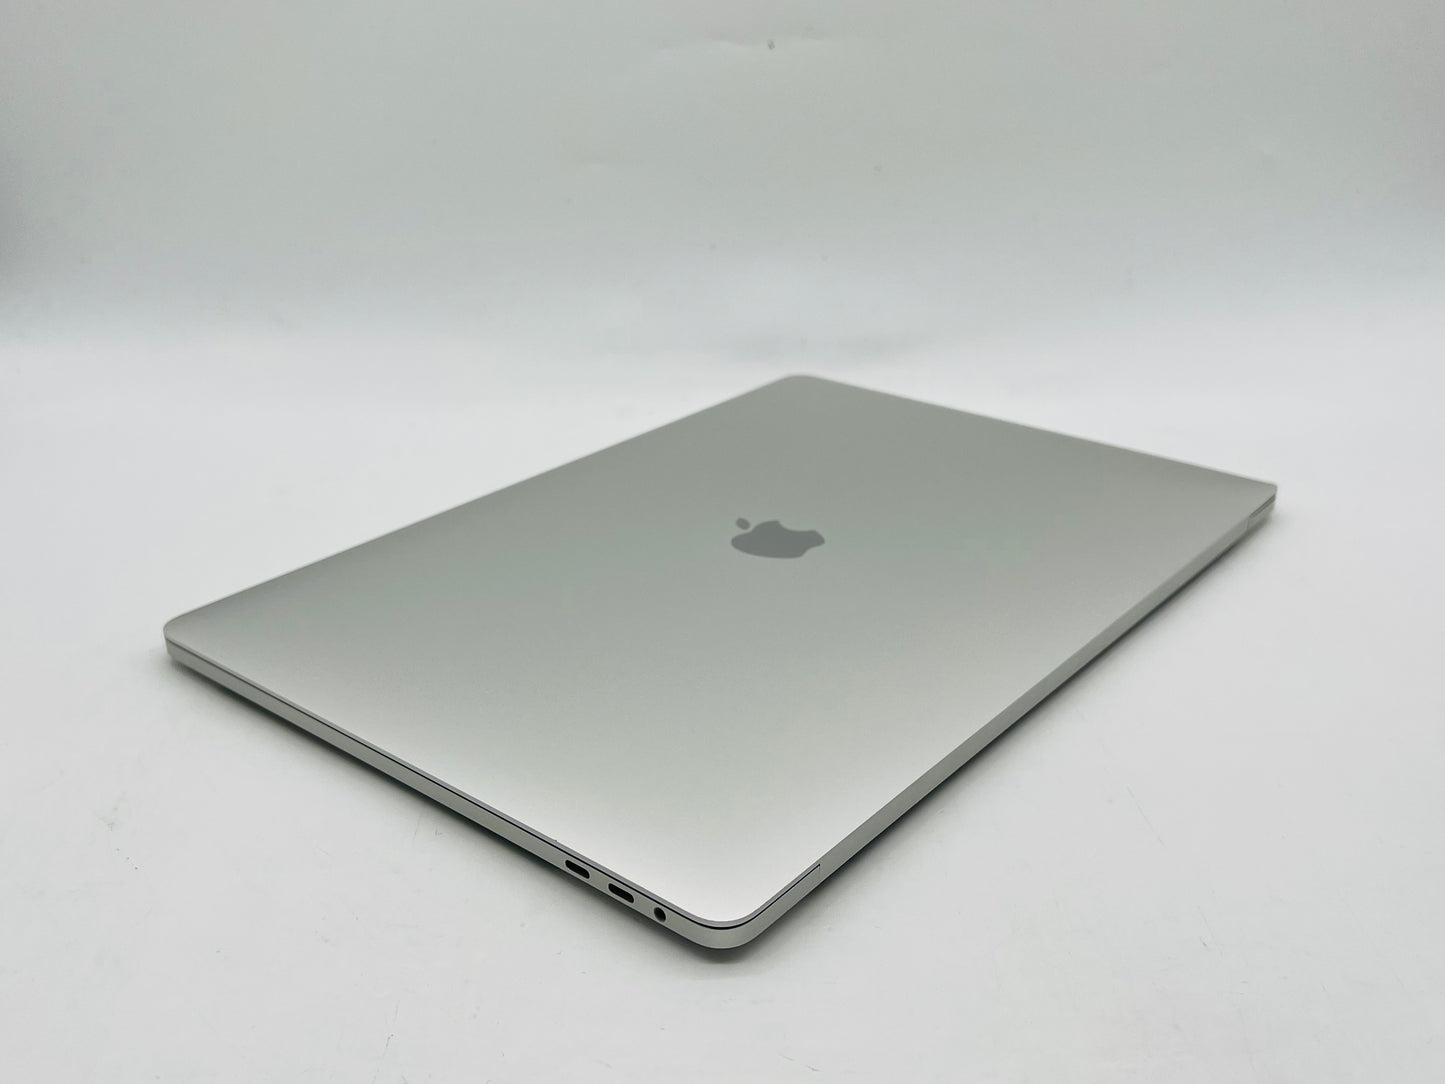 Apple 2019 MacBook Pro 15 in TB 2.4GHz 8-Core i9 32GB RAM 512GB SSD Vega 20 4GB